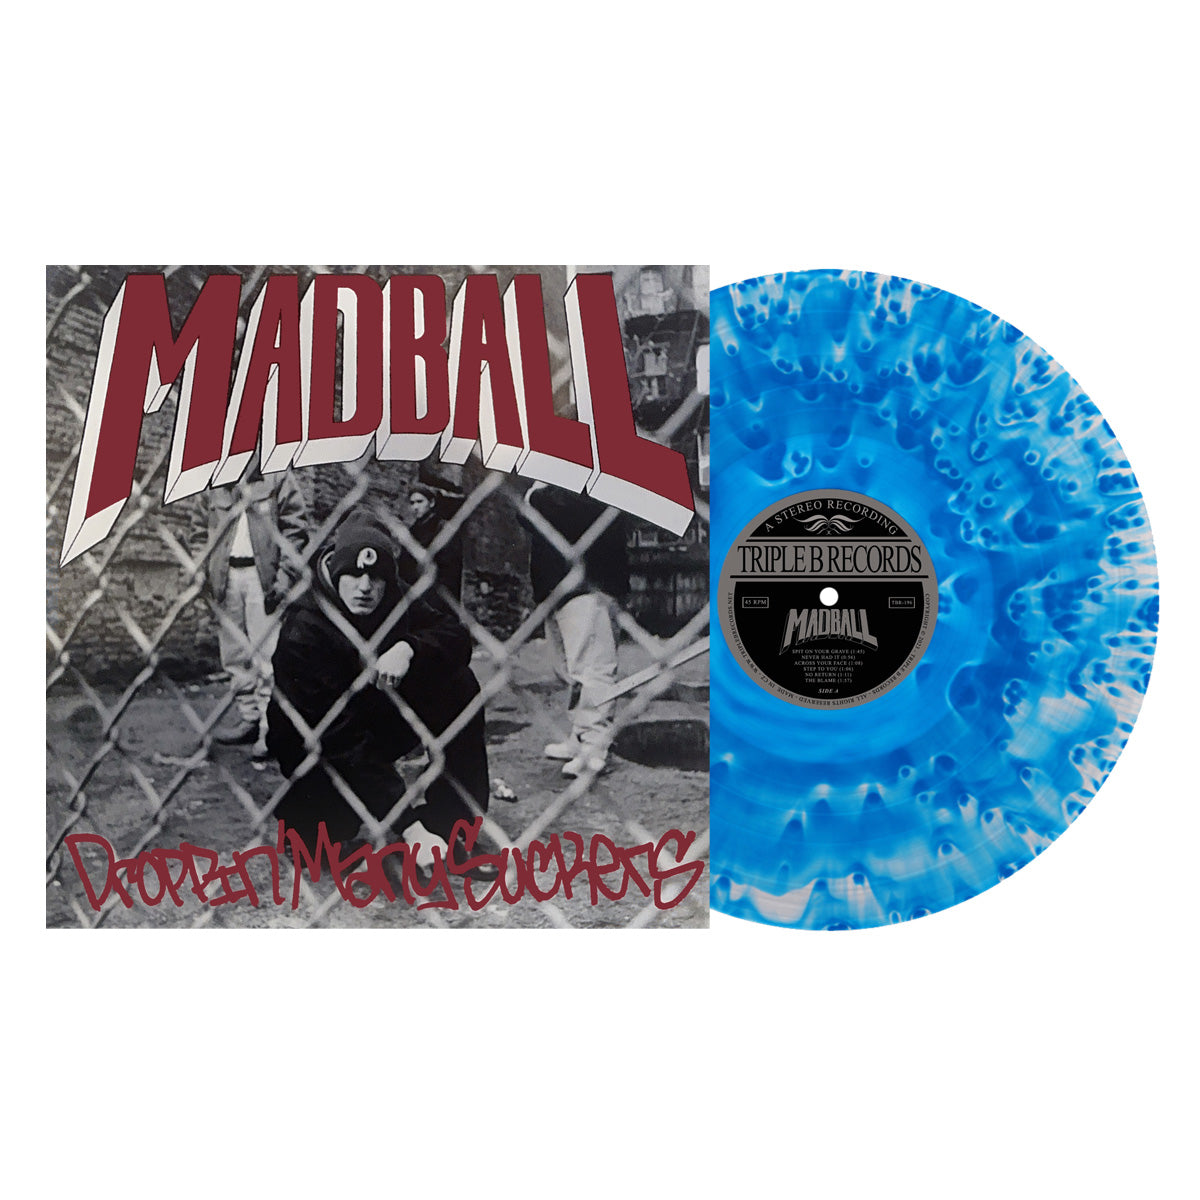 Madball - 'Droppin' Many Suckers' (Northern Scene Exclusive)